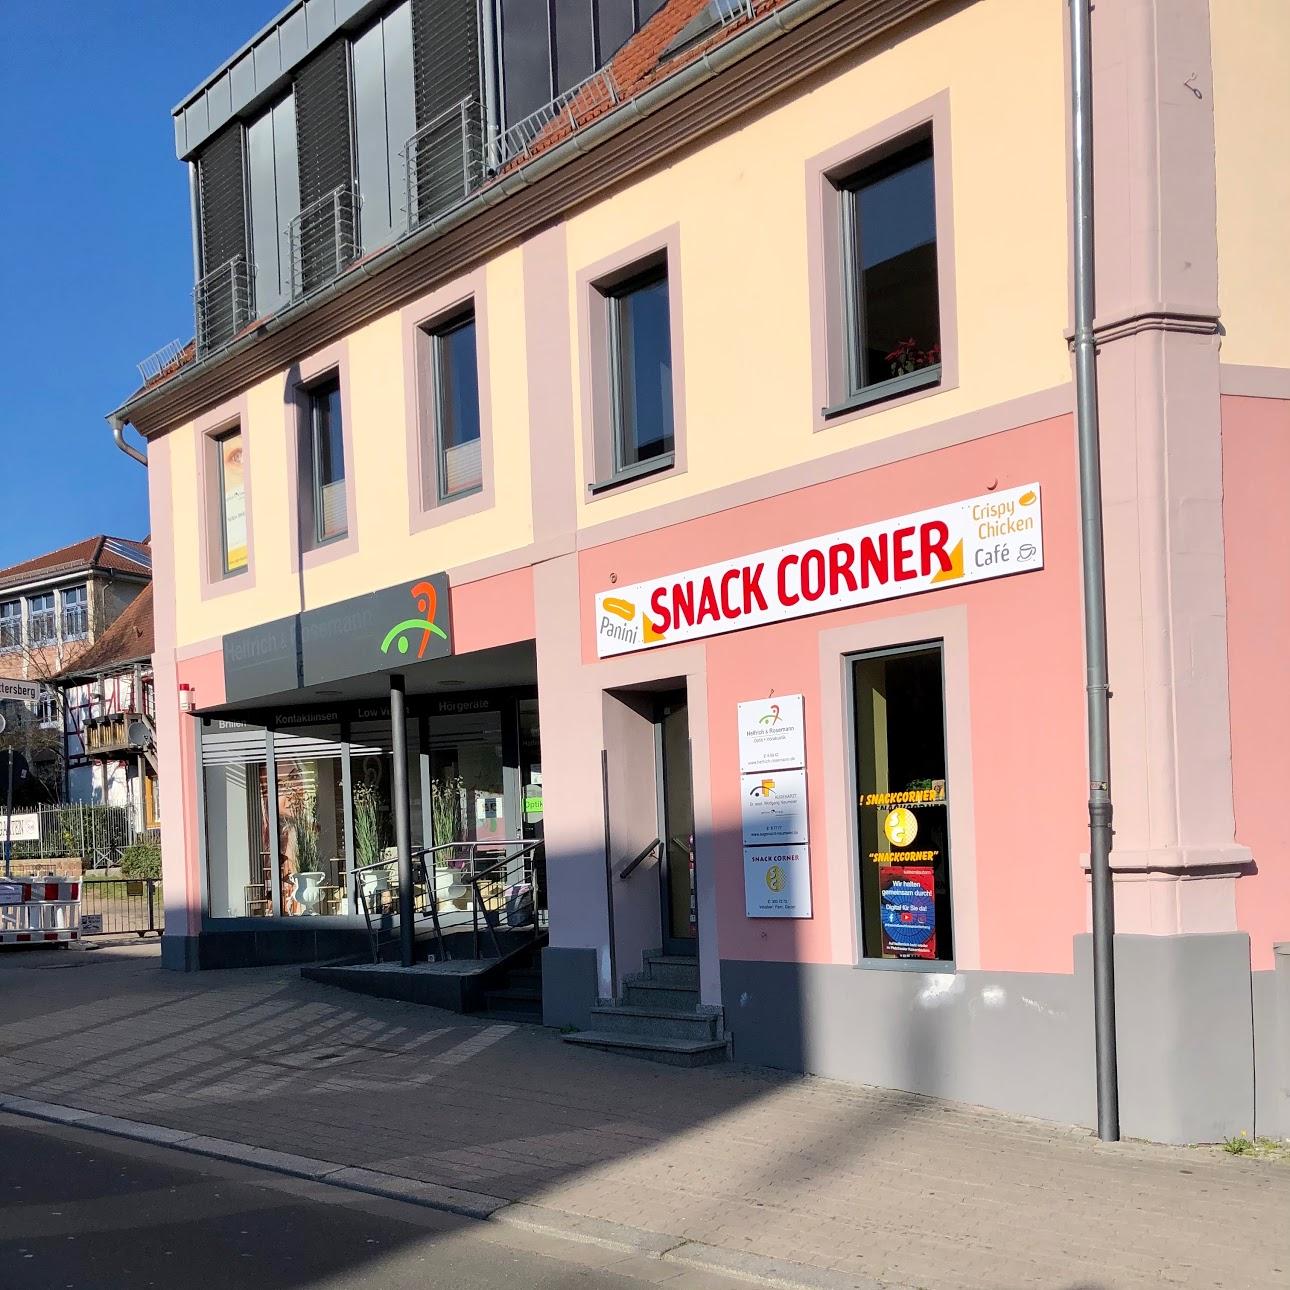 Restaurant "Snack Corner" in Kaiserslautern